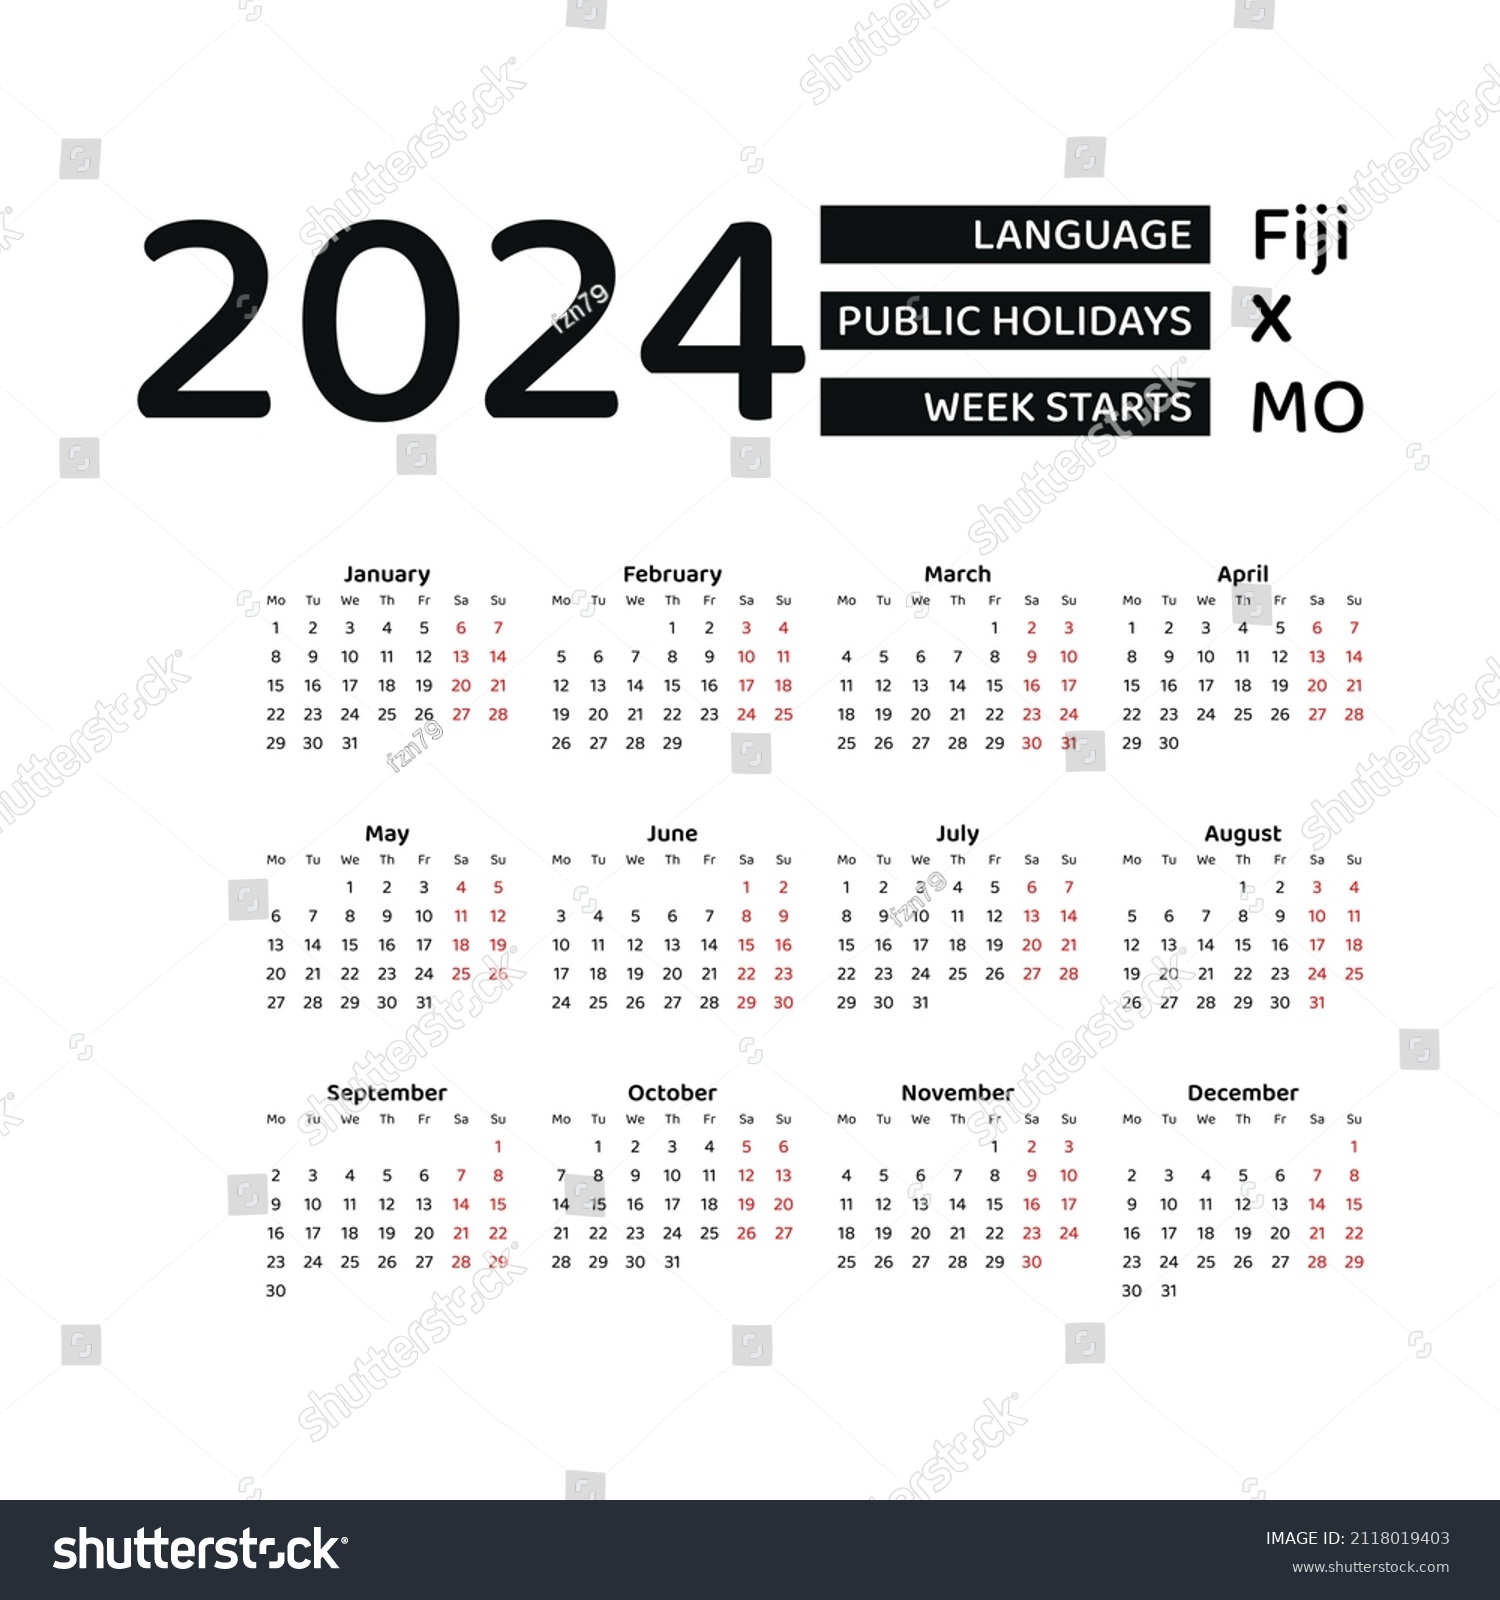 Fiji Calendar 2024 Week Starts Monday เวกเตอร์สต็อก (ปลอดค่าลิขสิทธิ์